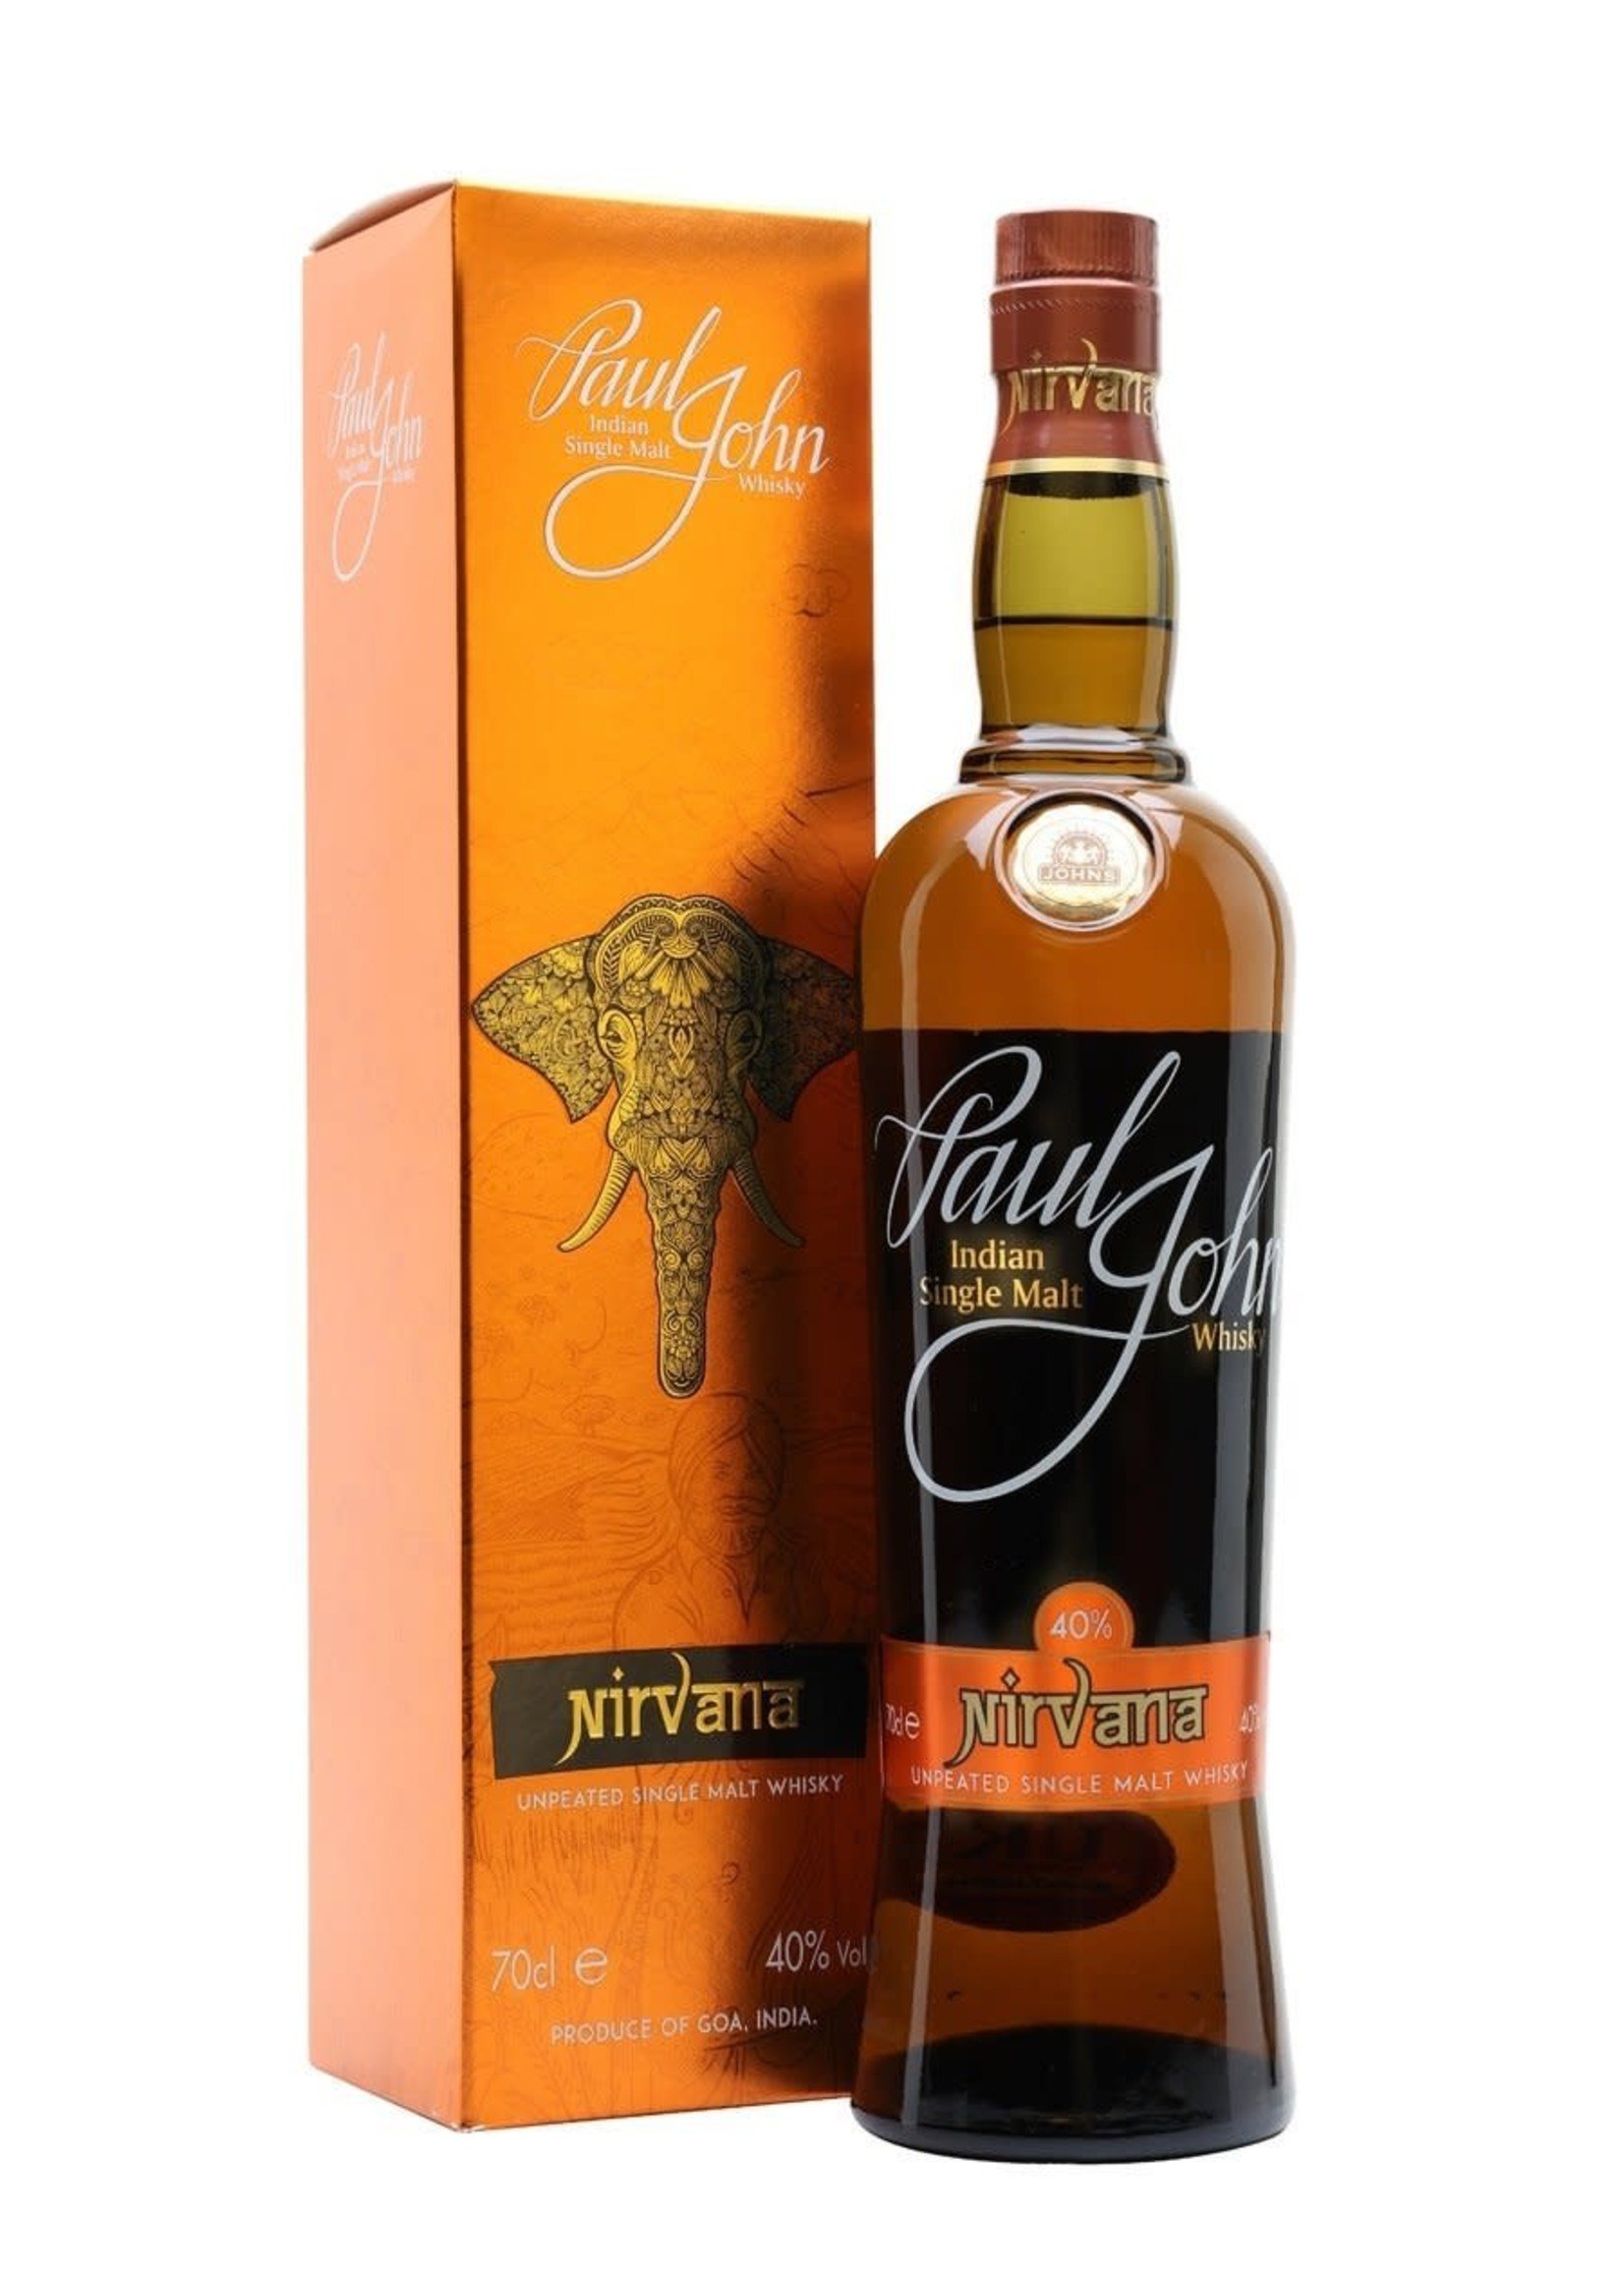 Paul John Paul John / Nirvana Single Malt Indian Whisky 40% abv / 750mL